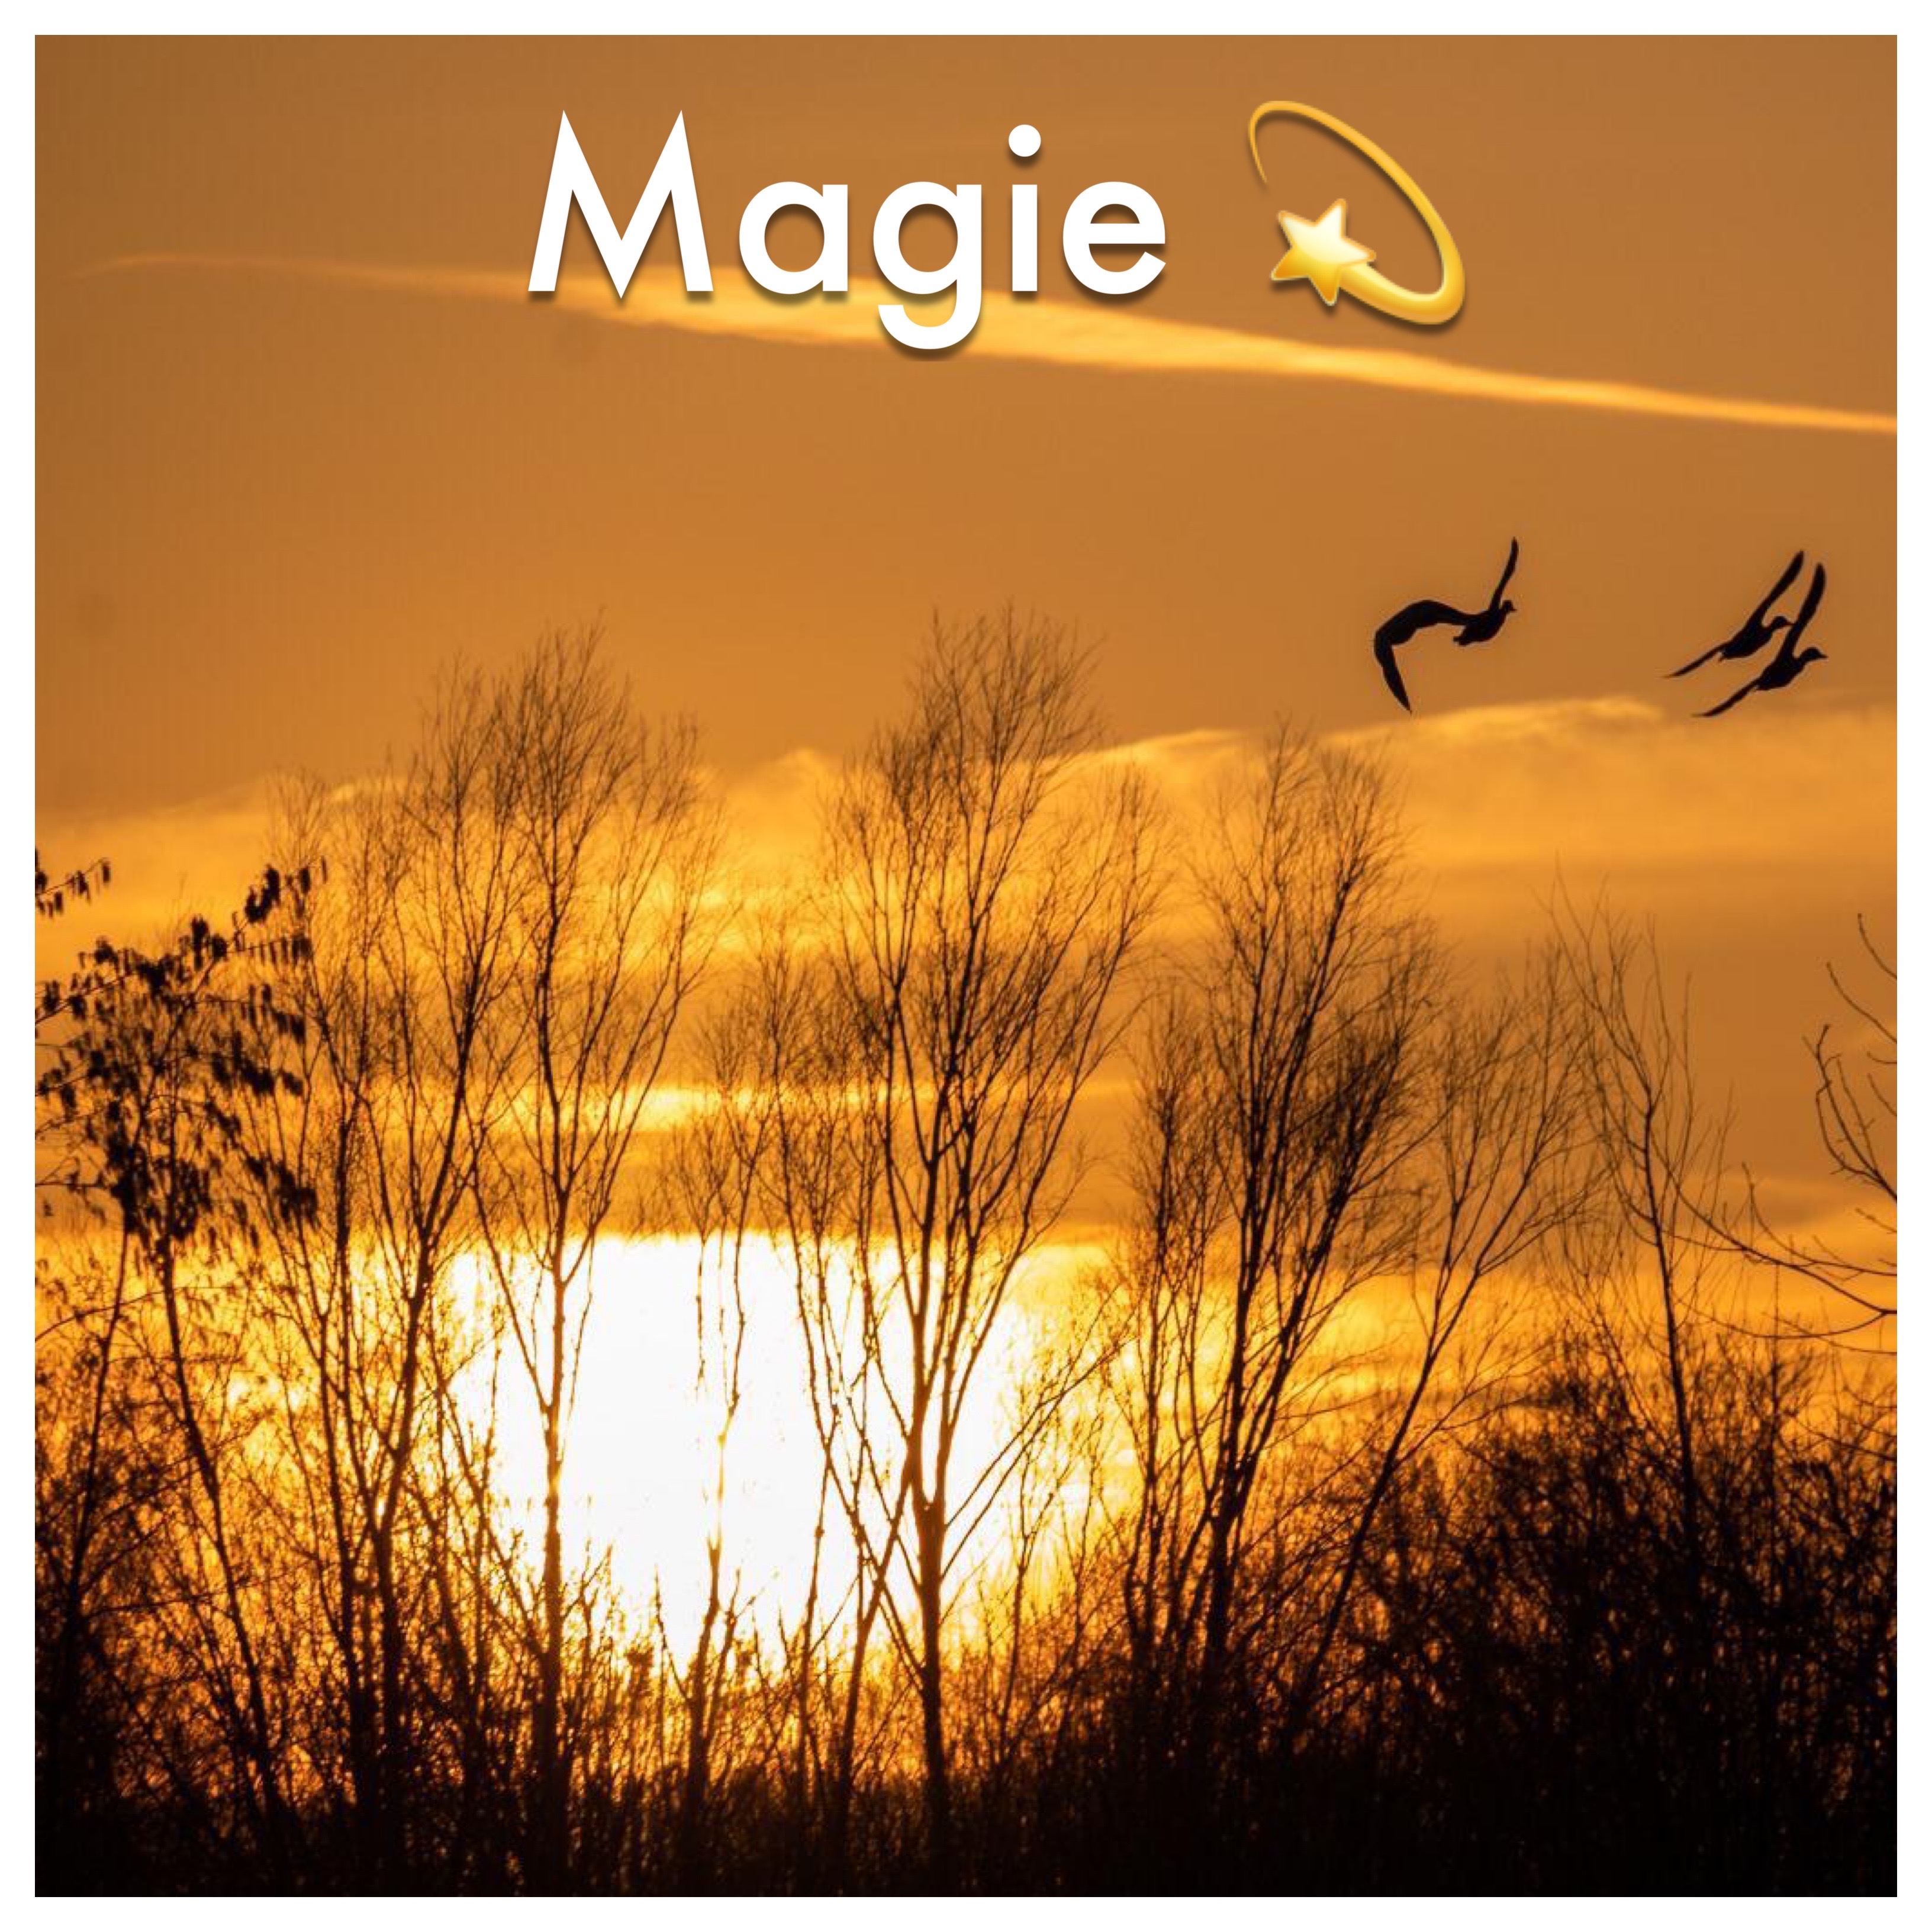 Magie IMG 5117